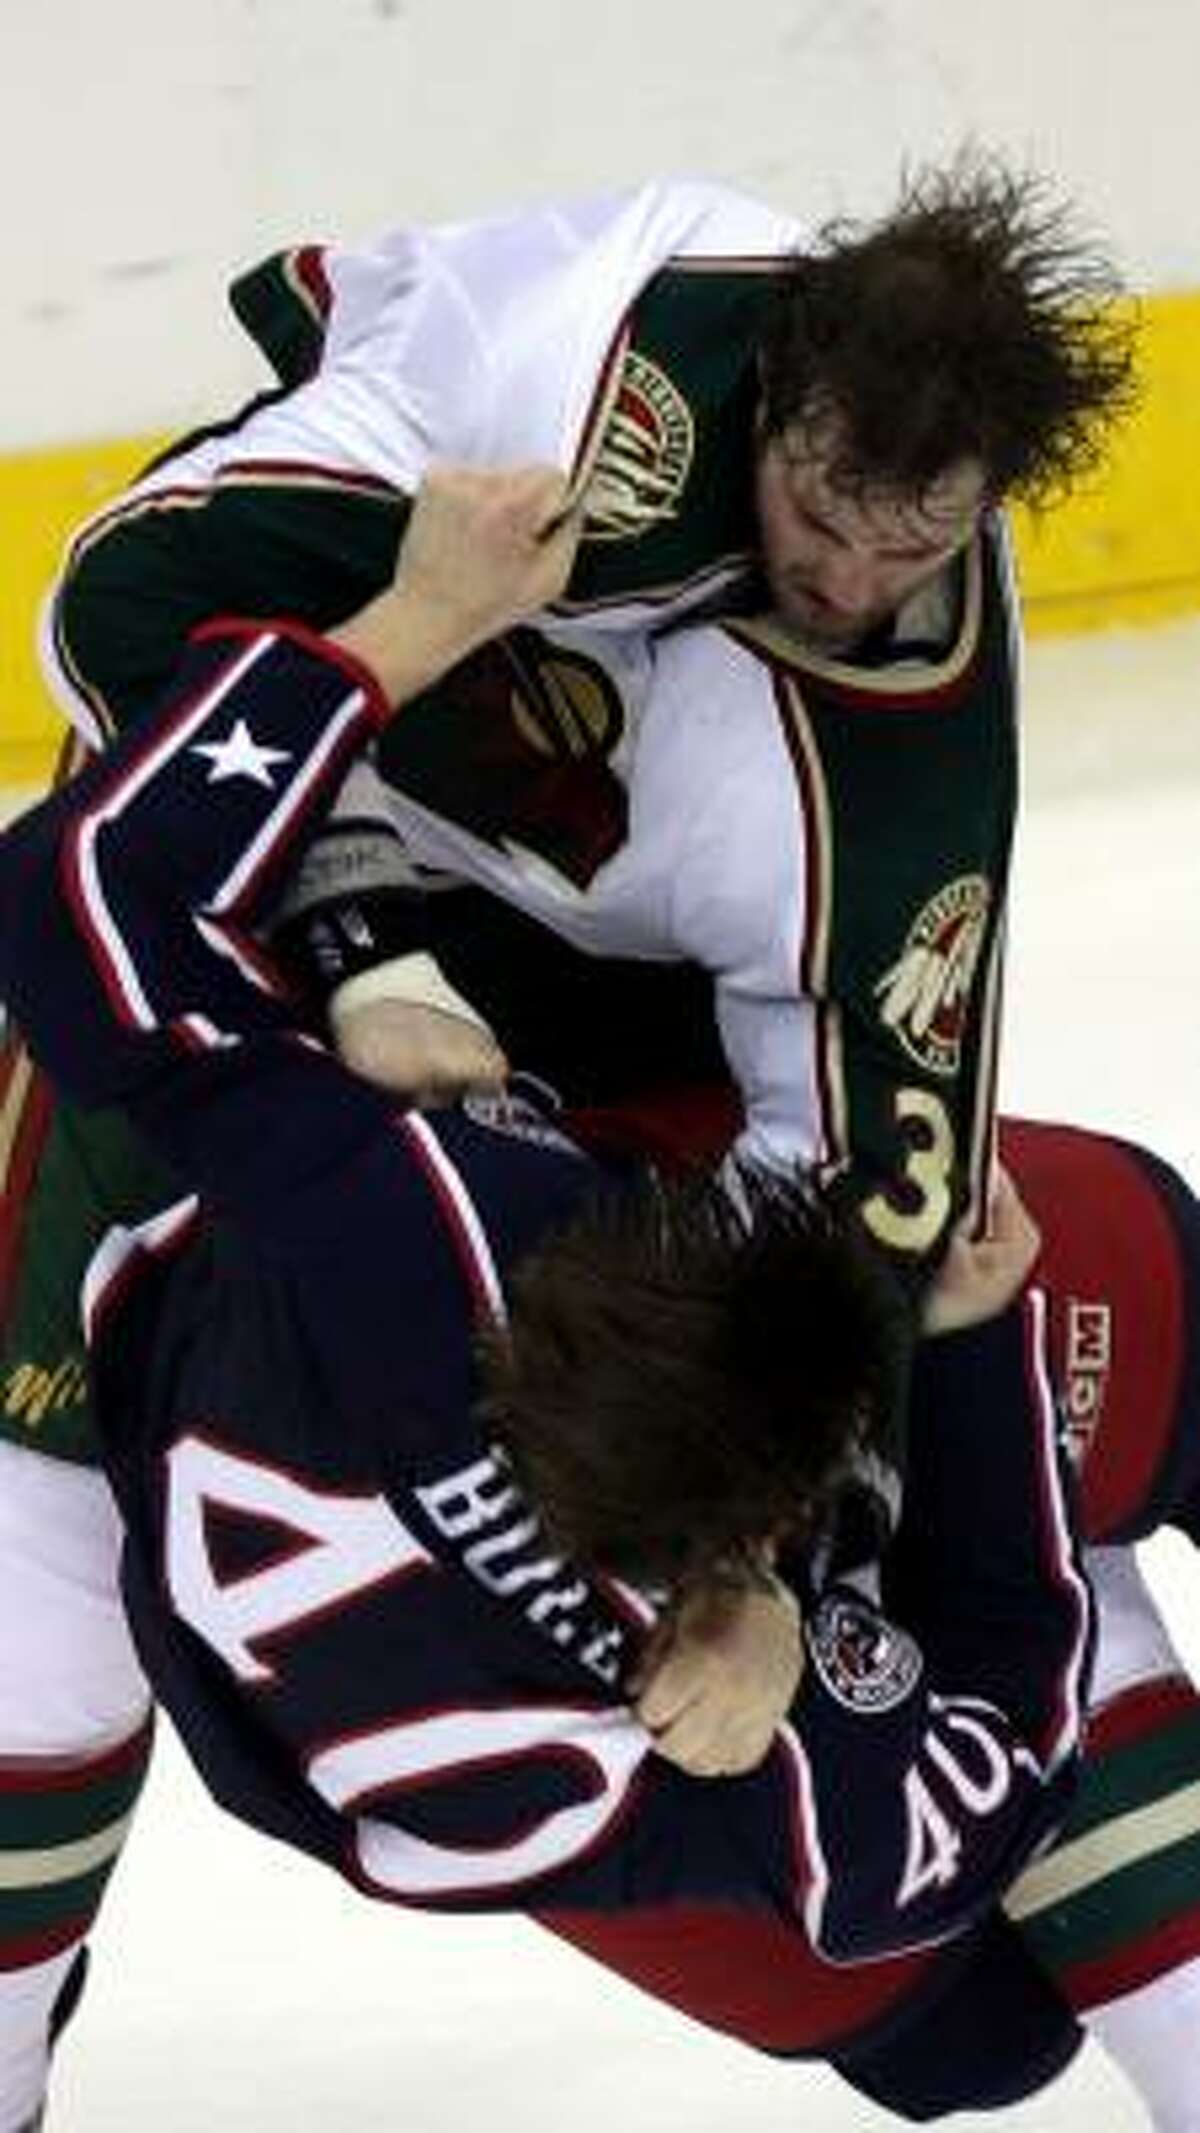 Minnesota's Derek Boogaard (a former Houston Aero) slams Columbus' Jared Boll to the ice.